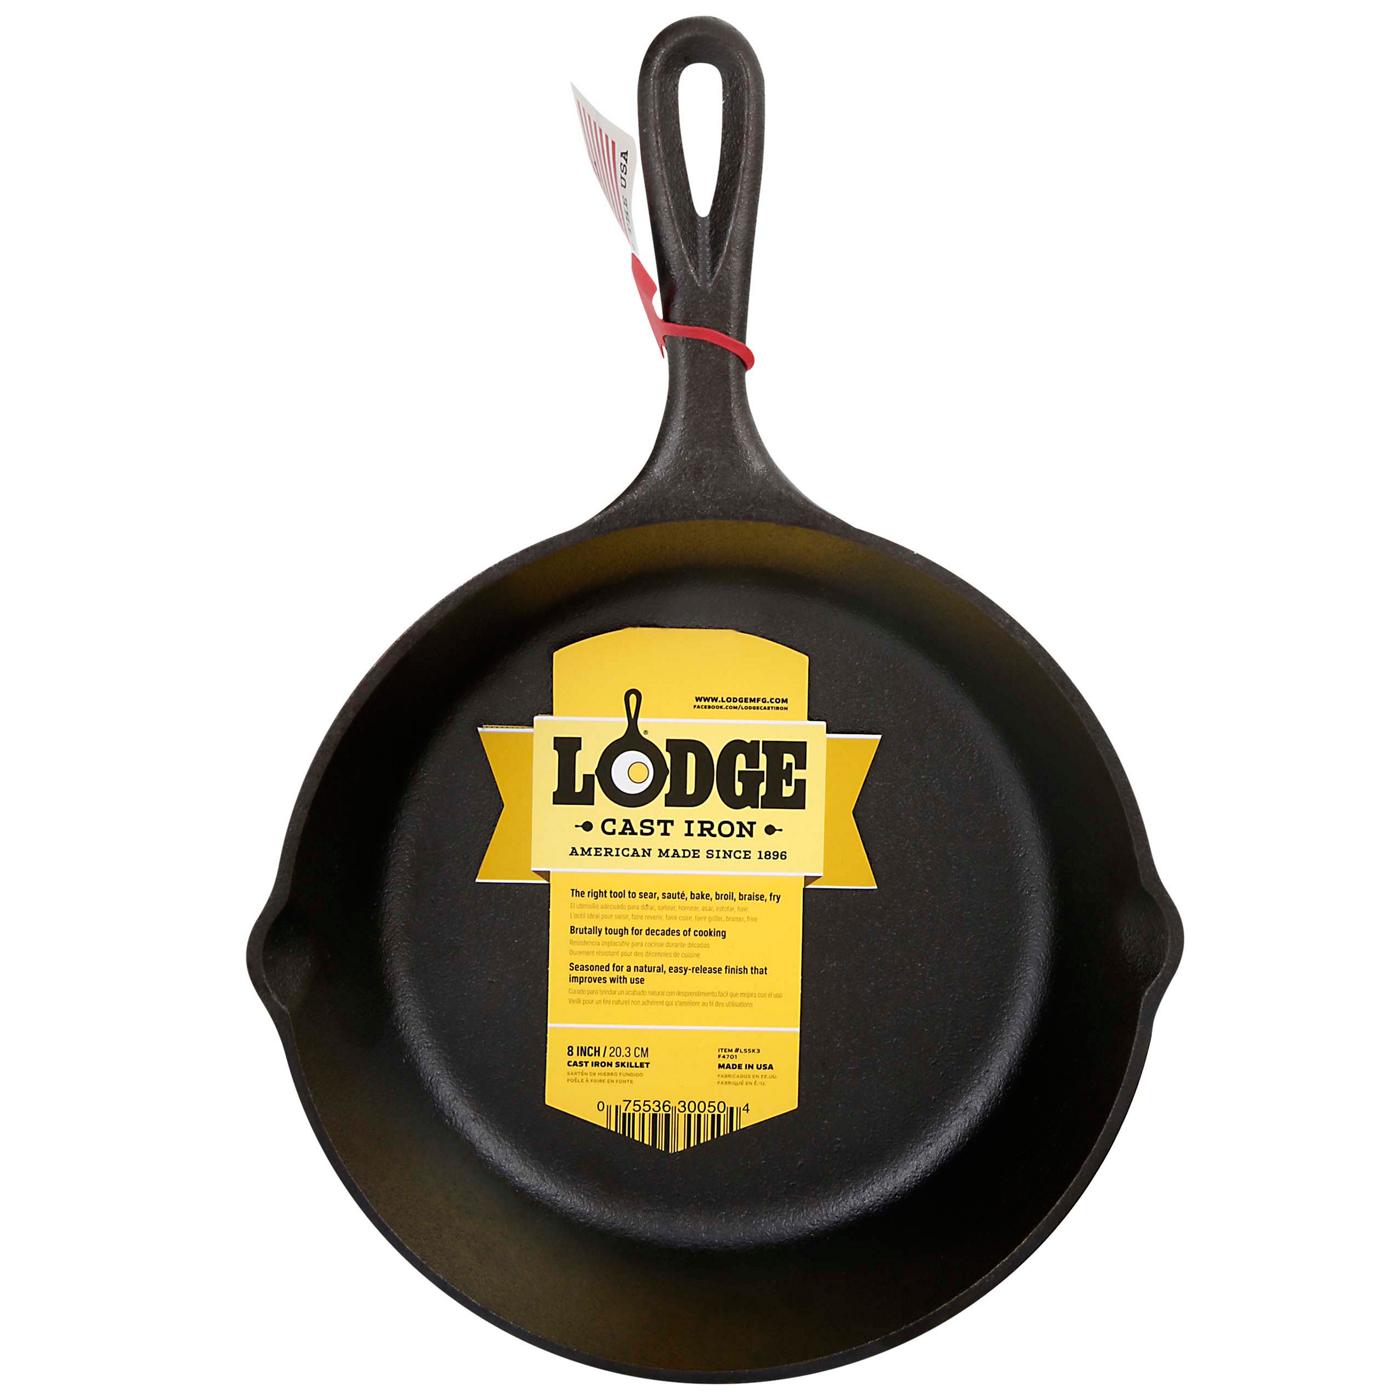 Lodge Cast Iron Seasoned Cast Iron Baking Pan in Black